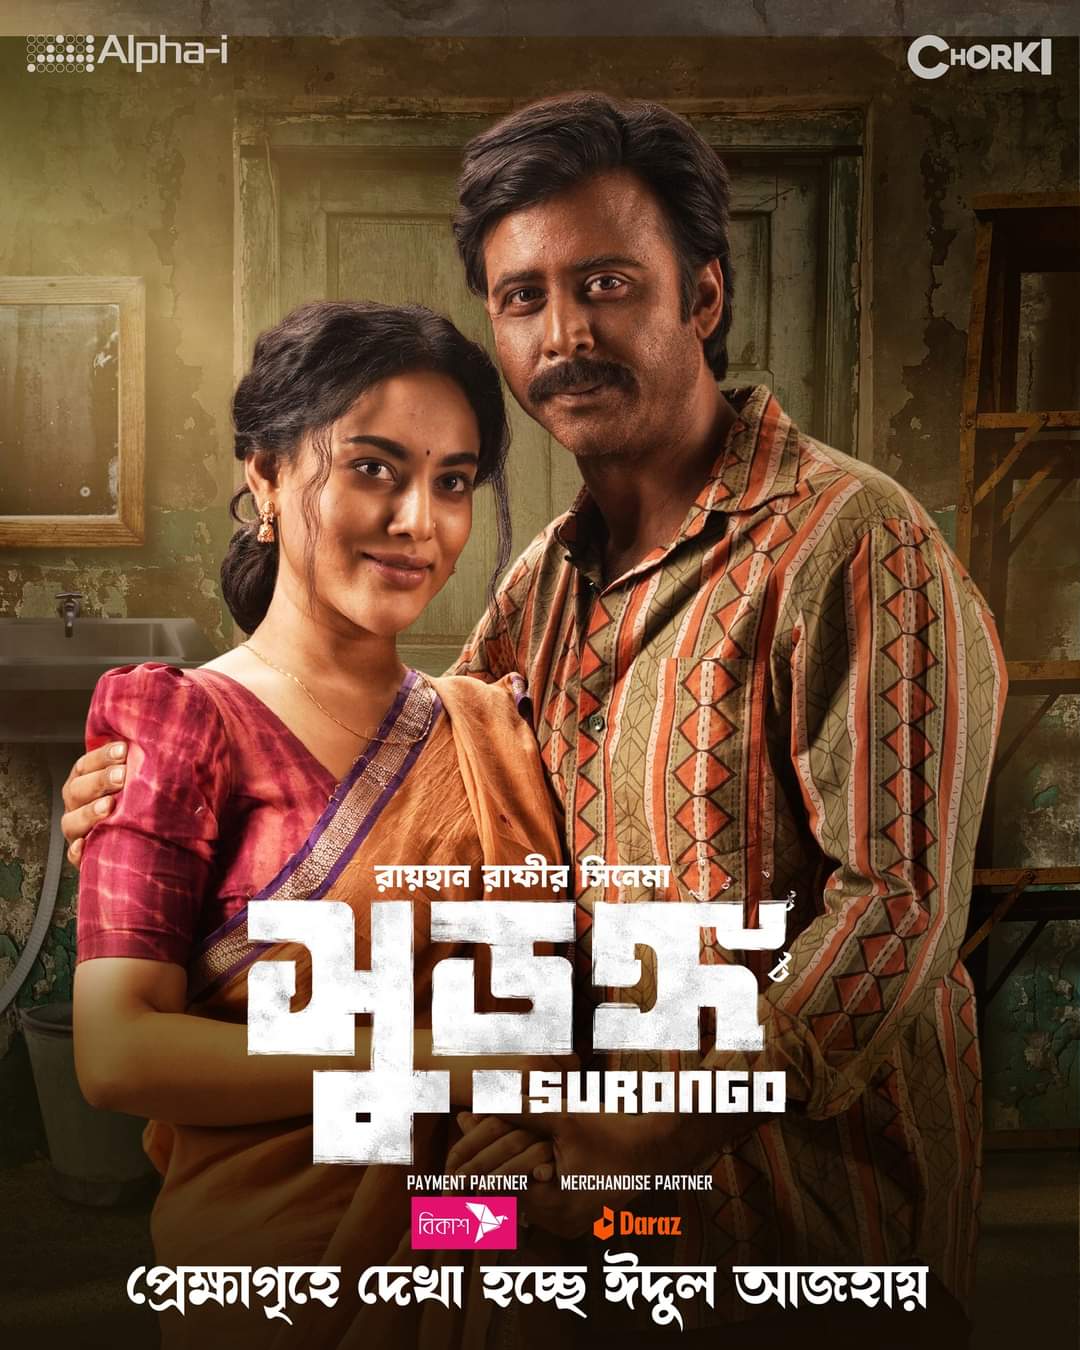 Surong – a Bangla Movie